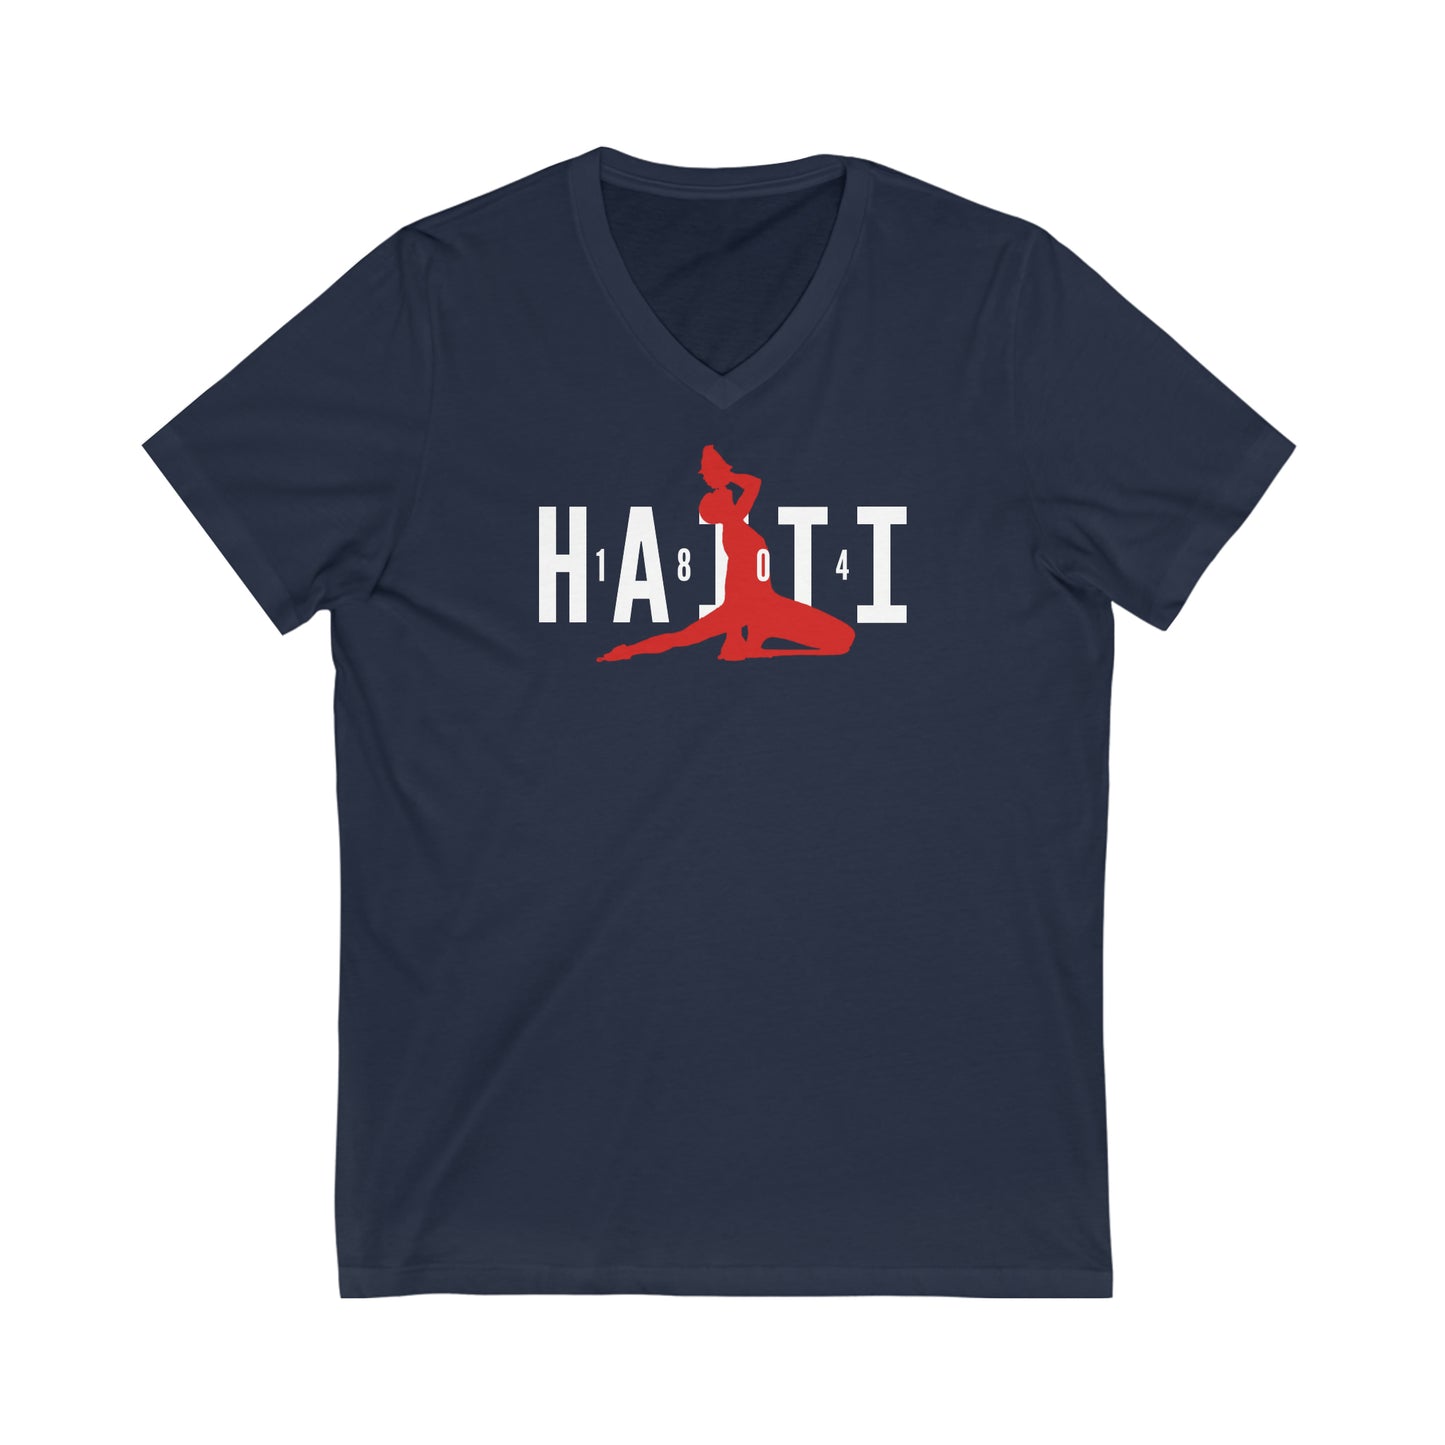 1804 Neg Mawon Haiti Neg Marron Haitian Revolution V-Neck T-Shirt | Unisex Vee Shirt